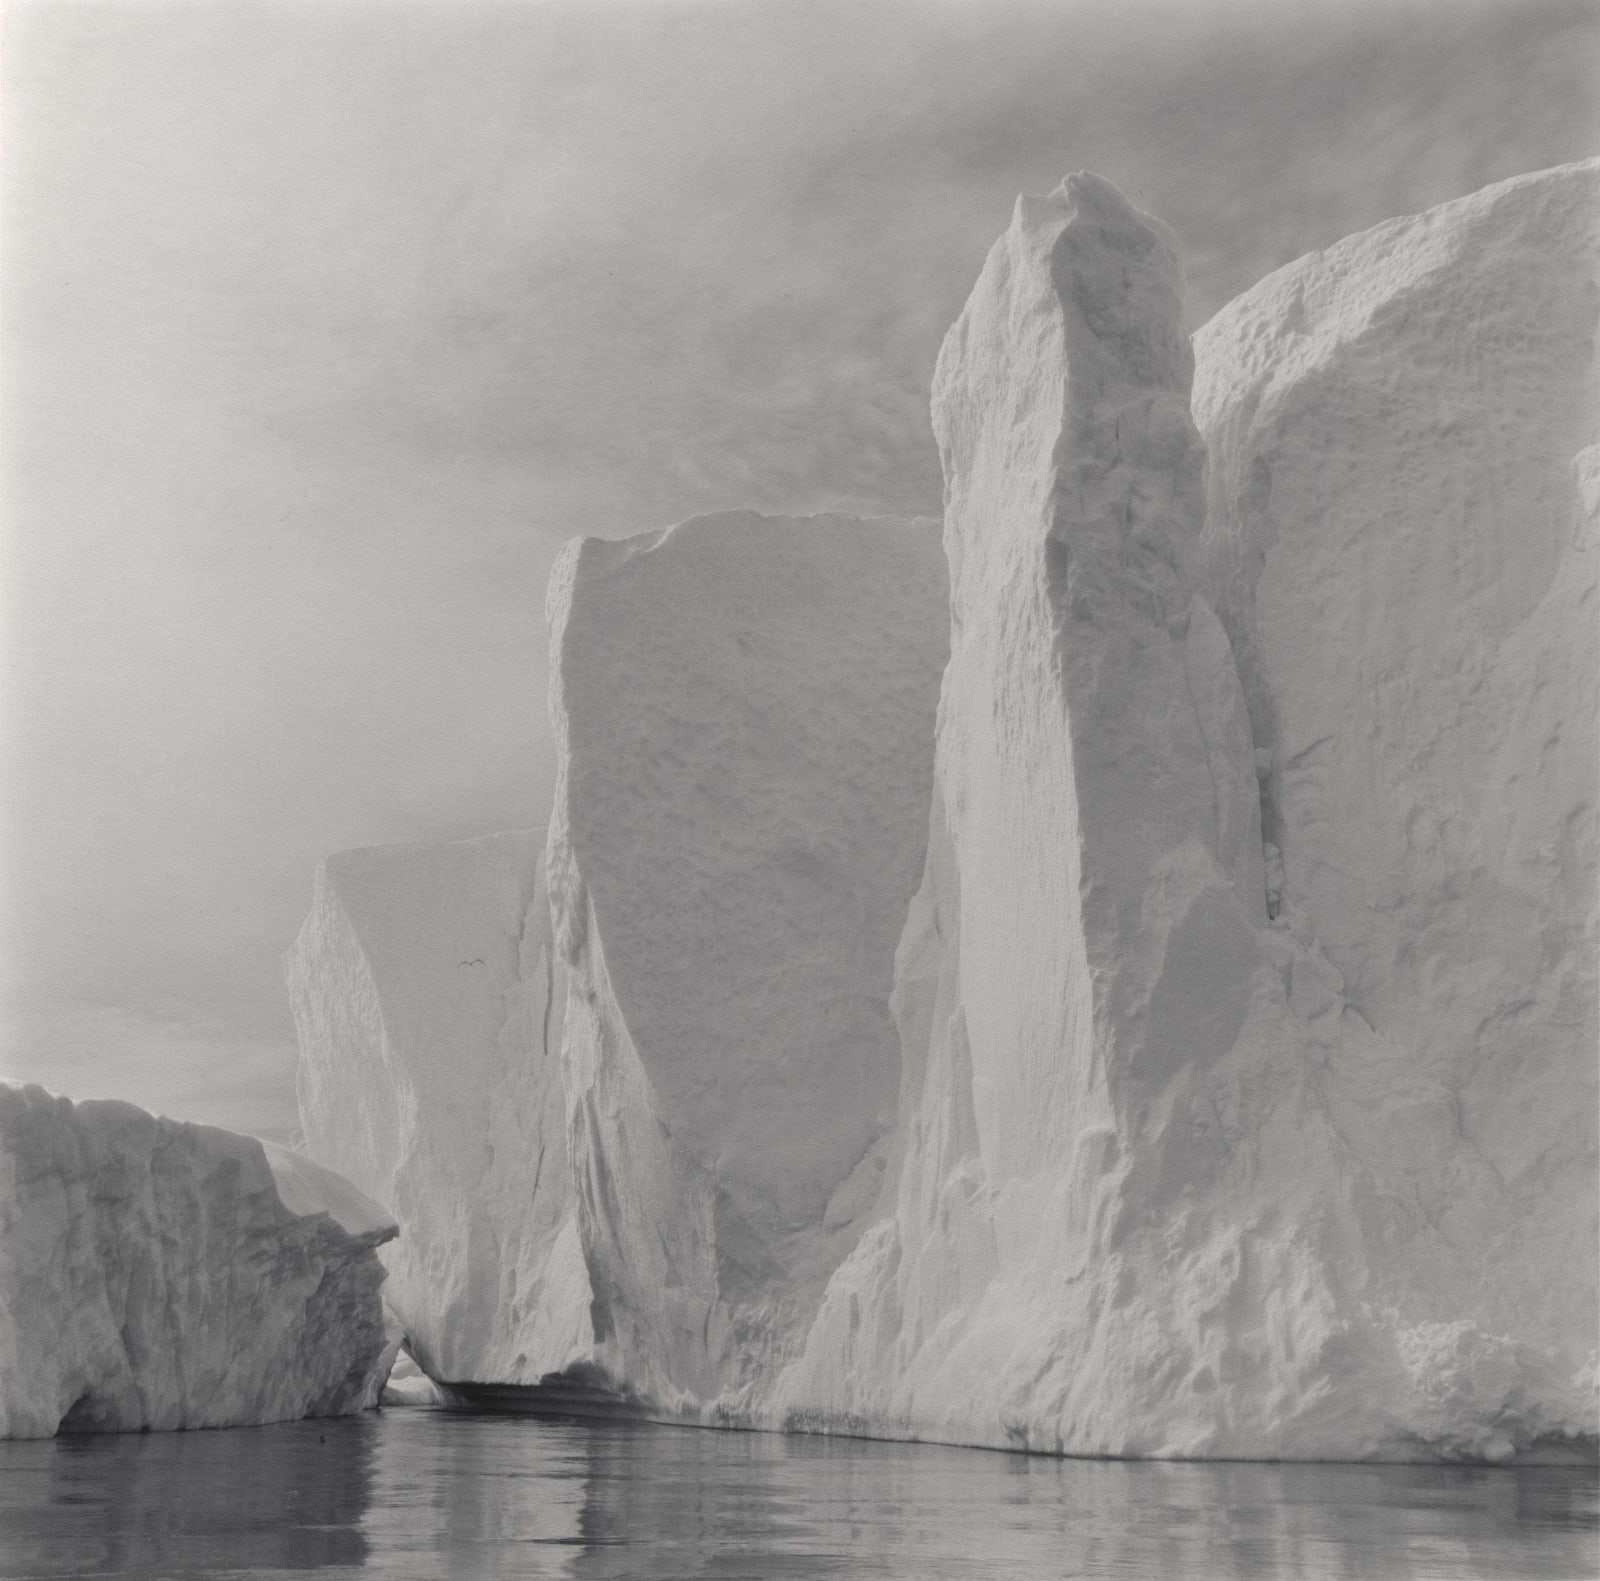 Lynn Davis photograph of iceberg in Disko Bay, Greeland, wiht ice in the shape of a totem pole